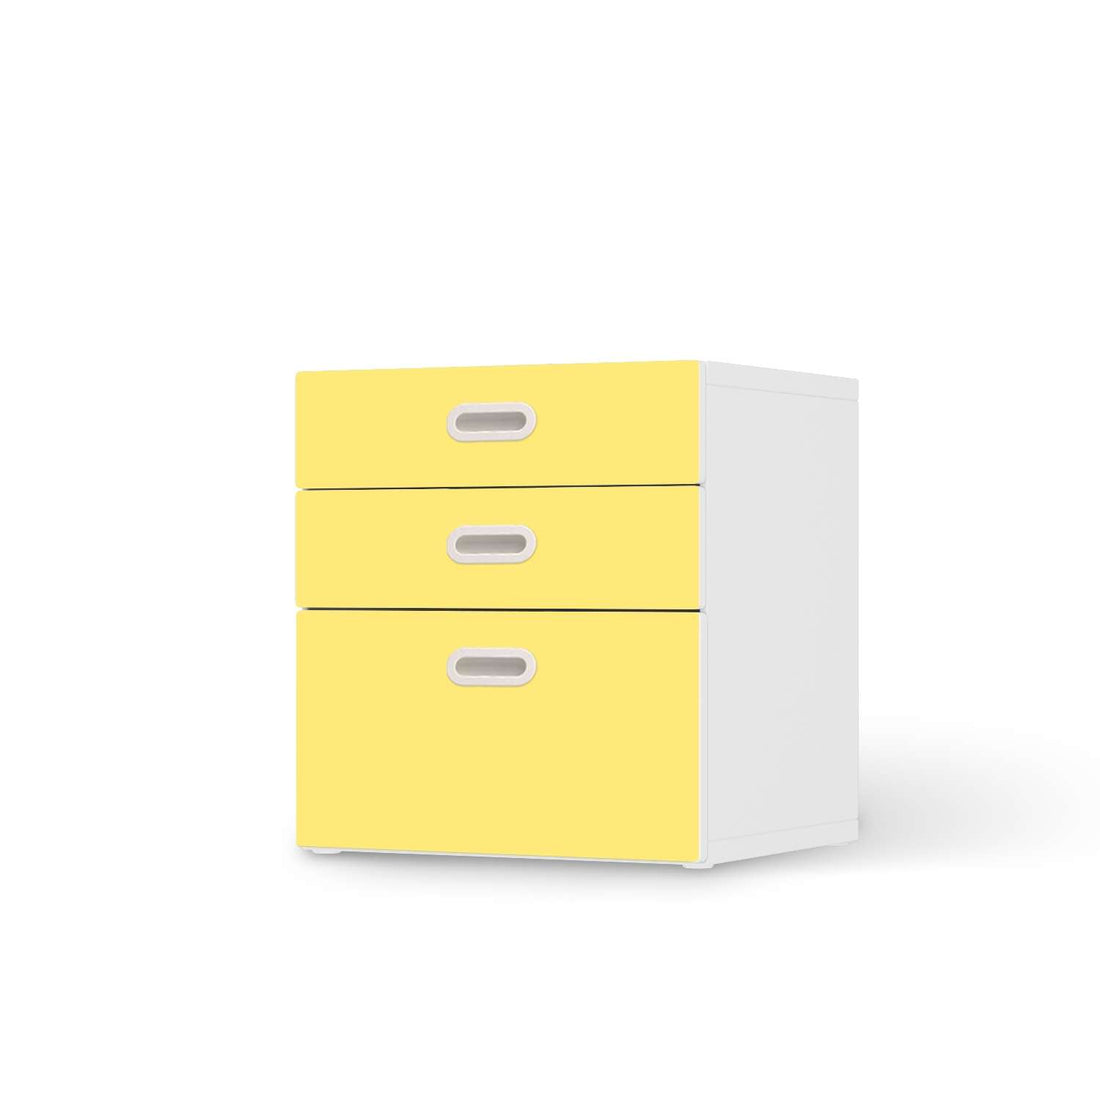 Folie für Möbel Gelb Light - IKEA Stuva / Fritids Kommode - 3 Schubladen  - weiss